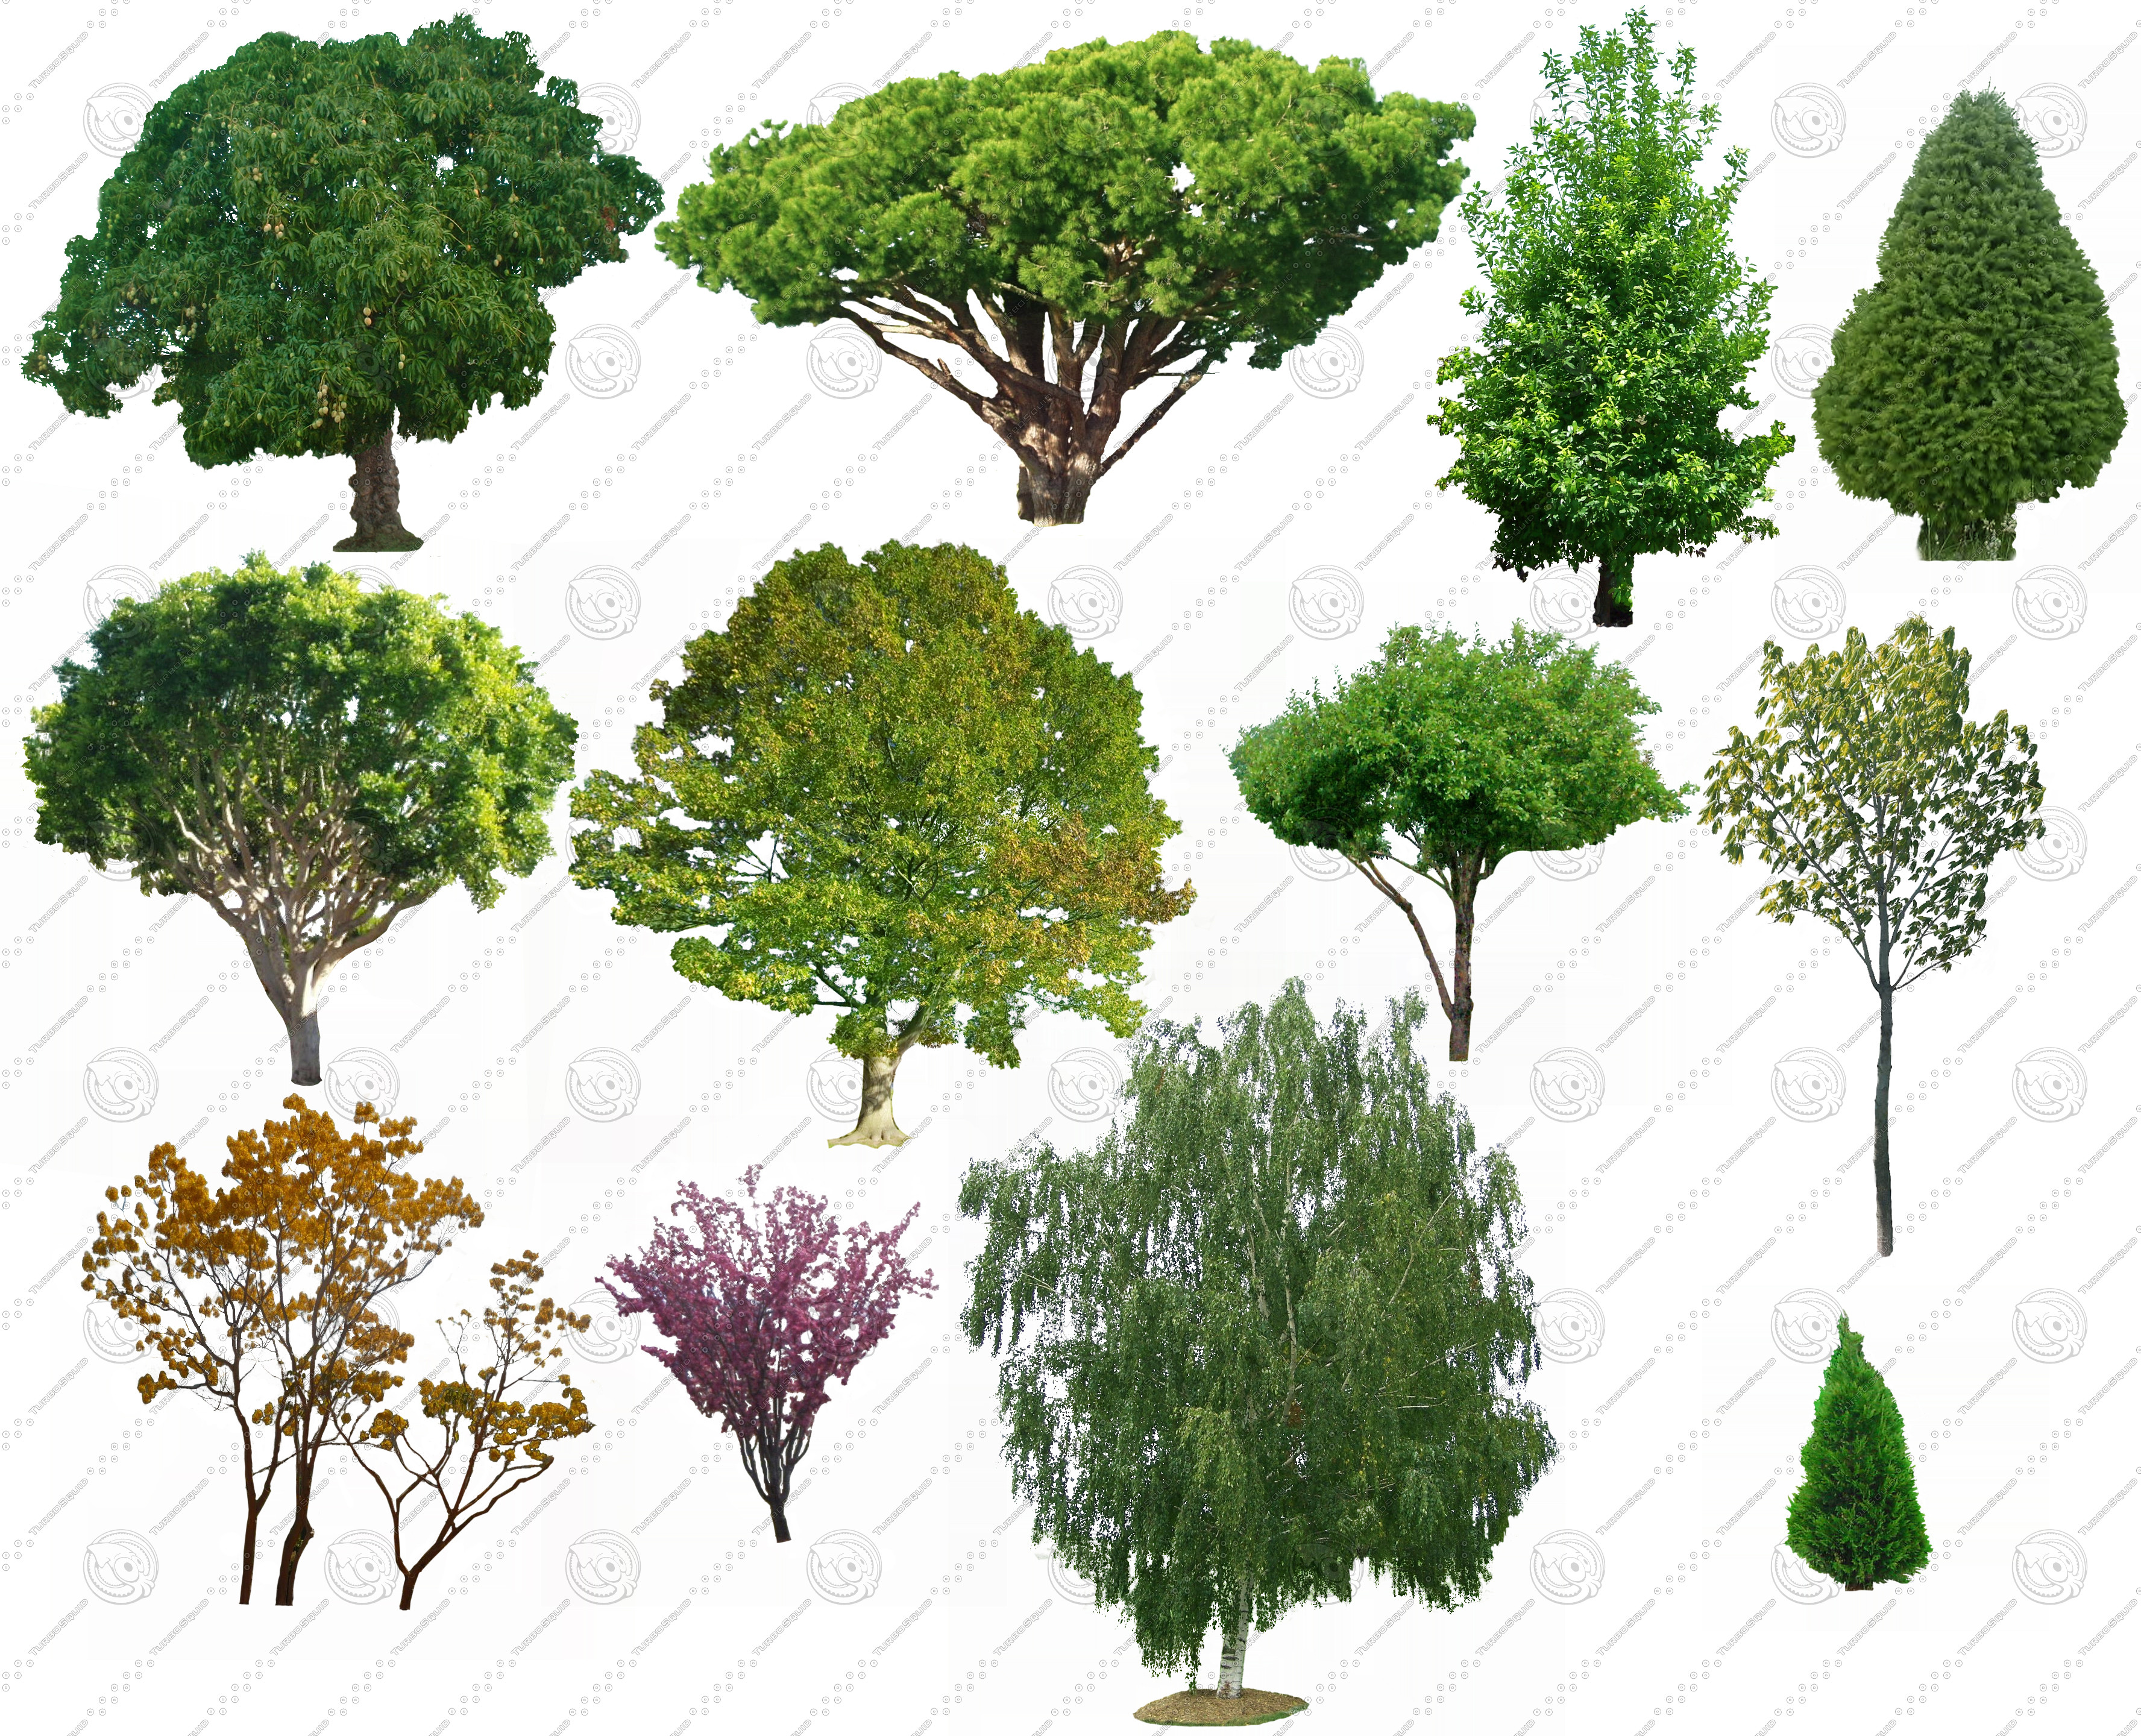 Plan View Trees Photoshop Texture